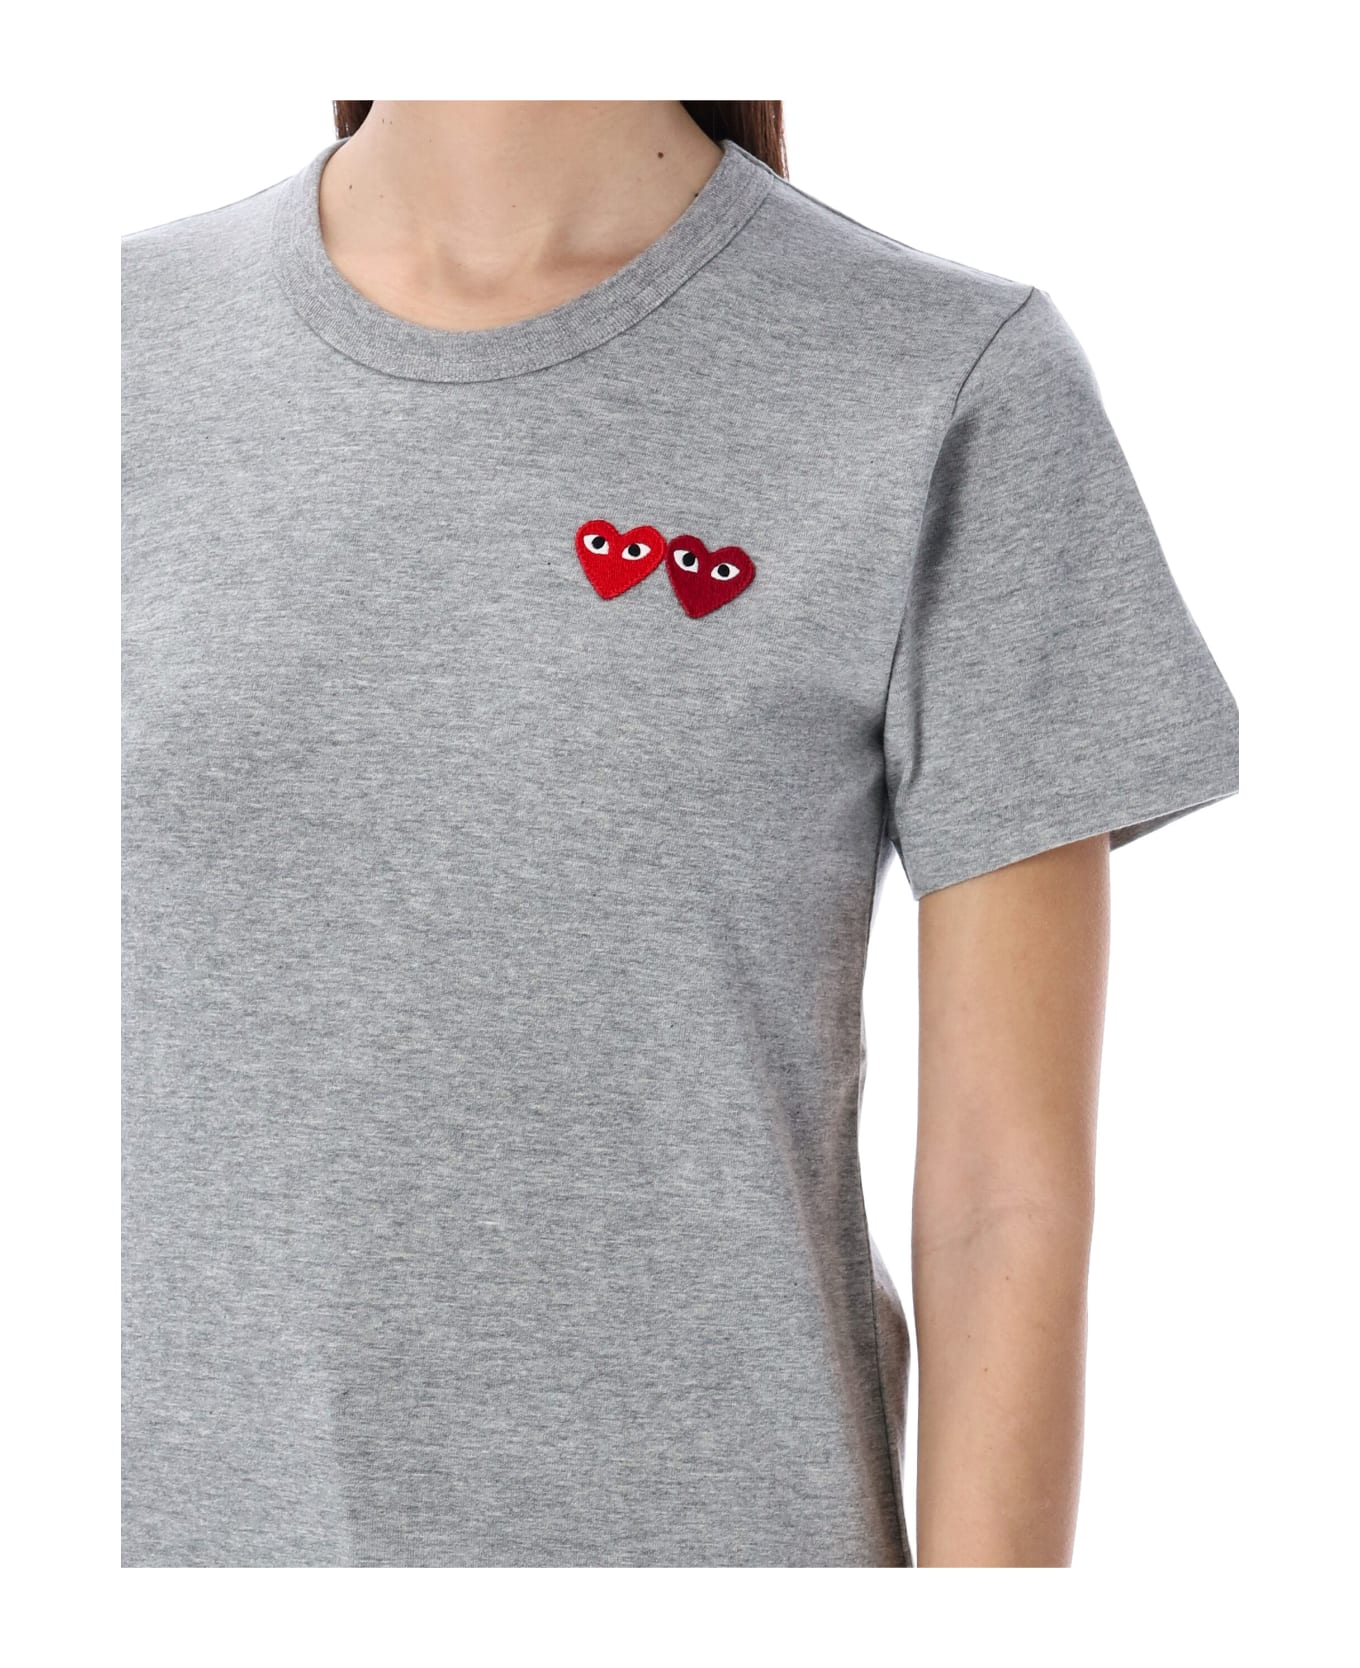 Comme des Garçons Play Double Heart T-shirt - GREY